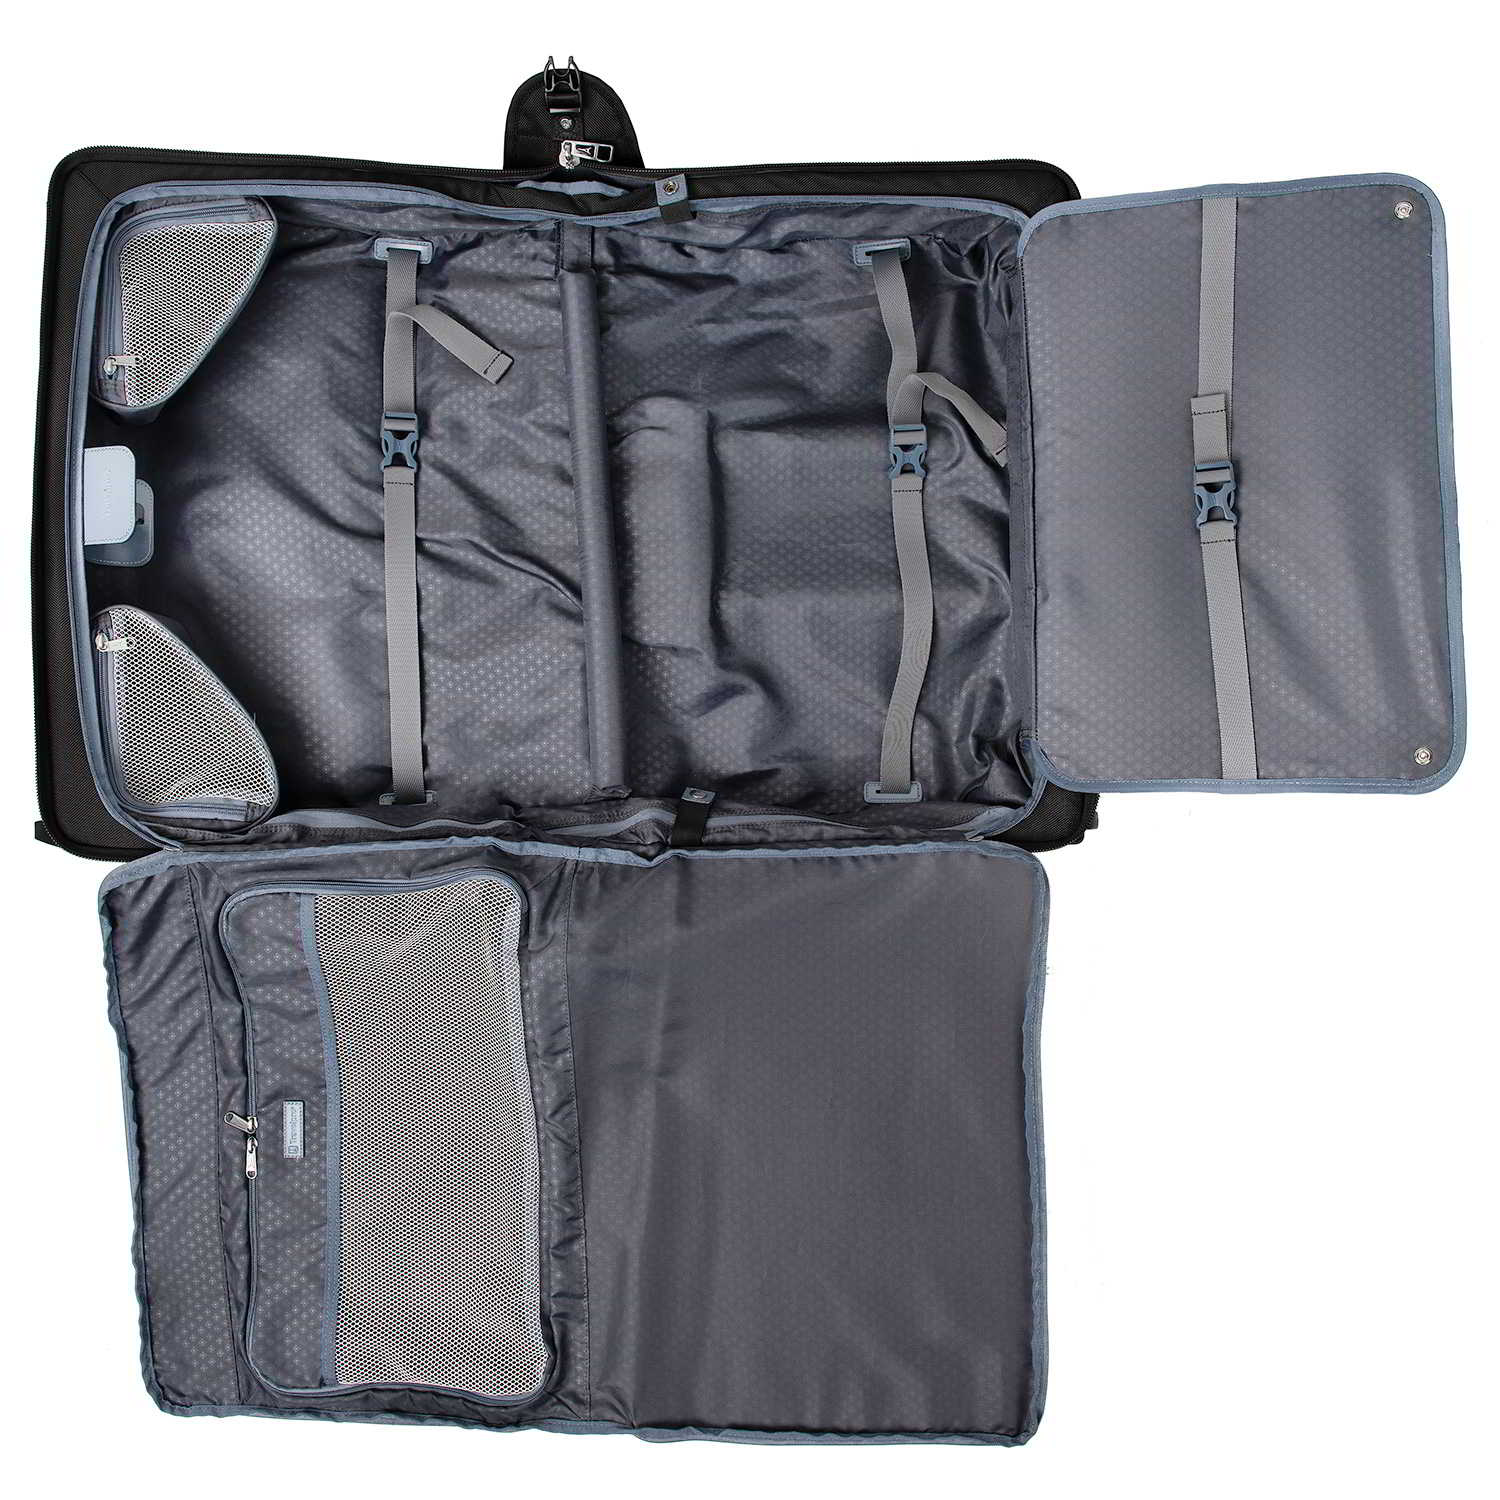 Travelpro Maxlite 5 Carry on Rolling Garment Bag - Black